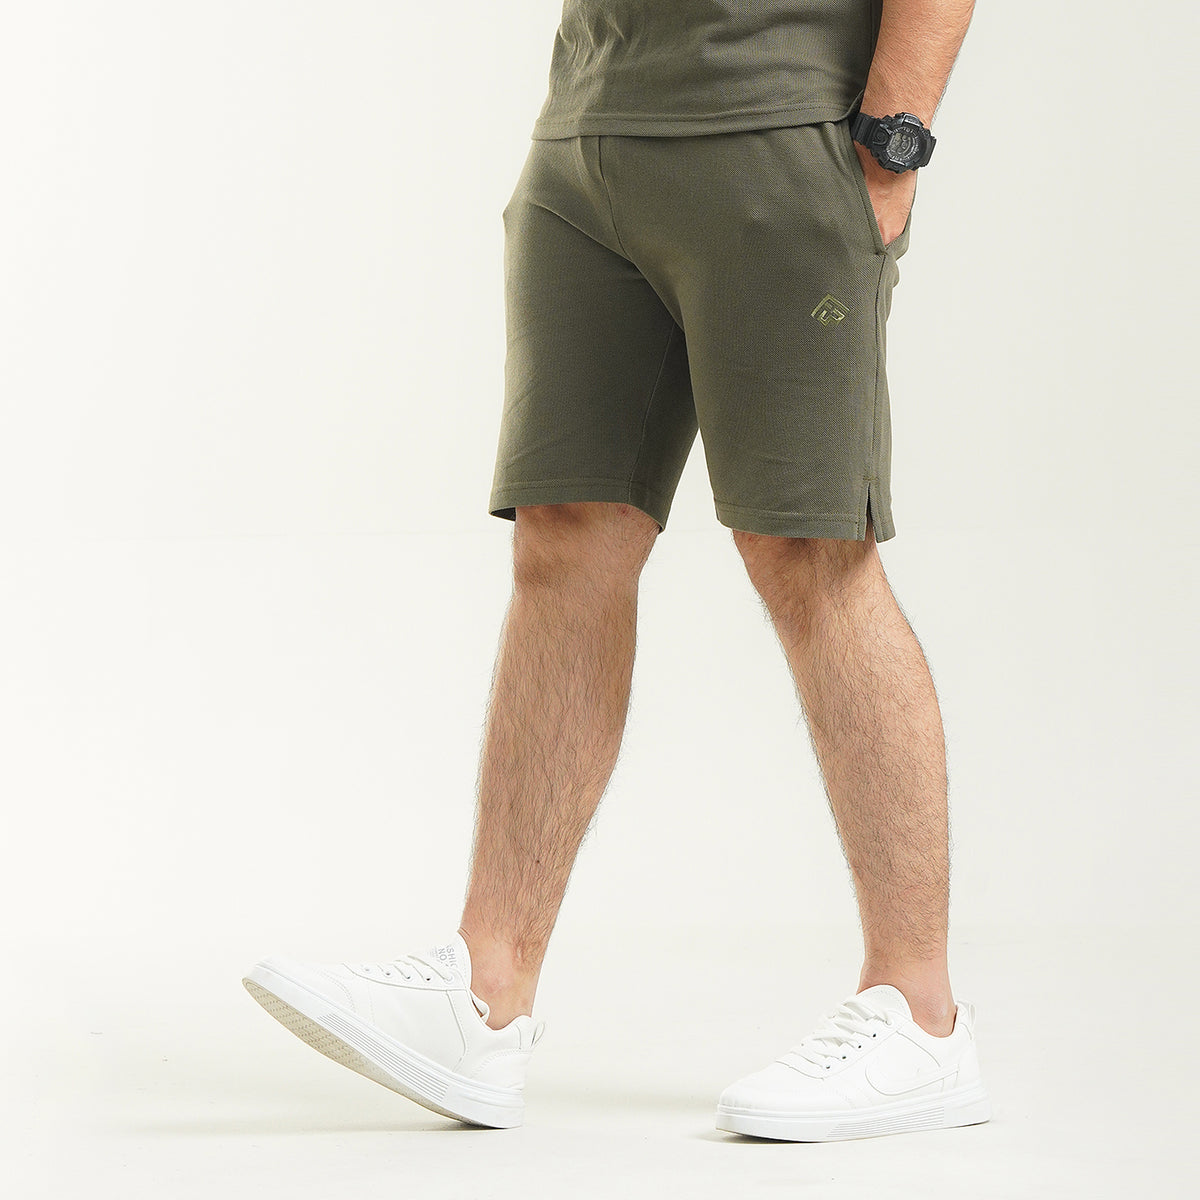 Fibr - Everyday OliveGreen Shorts